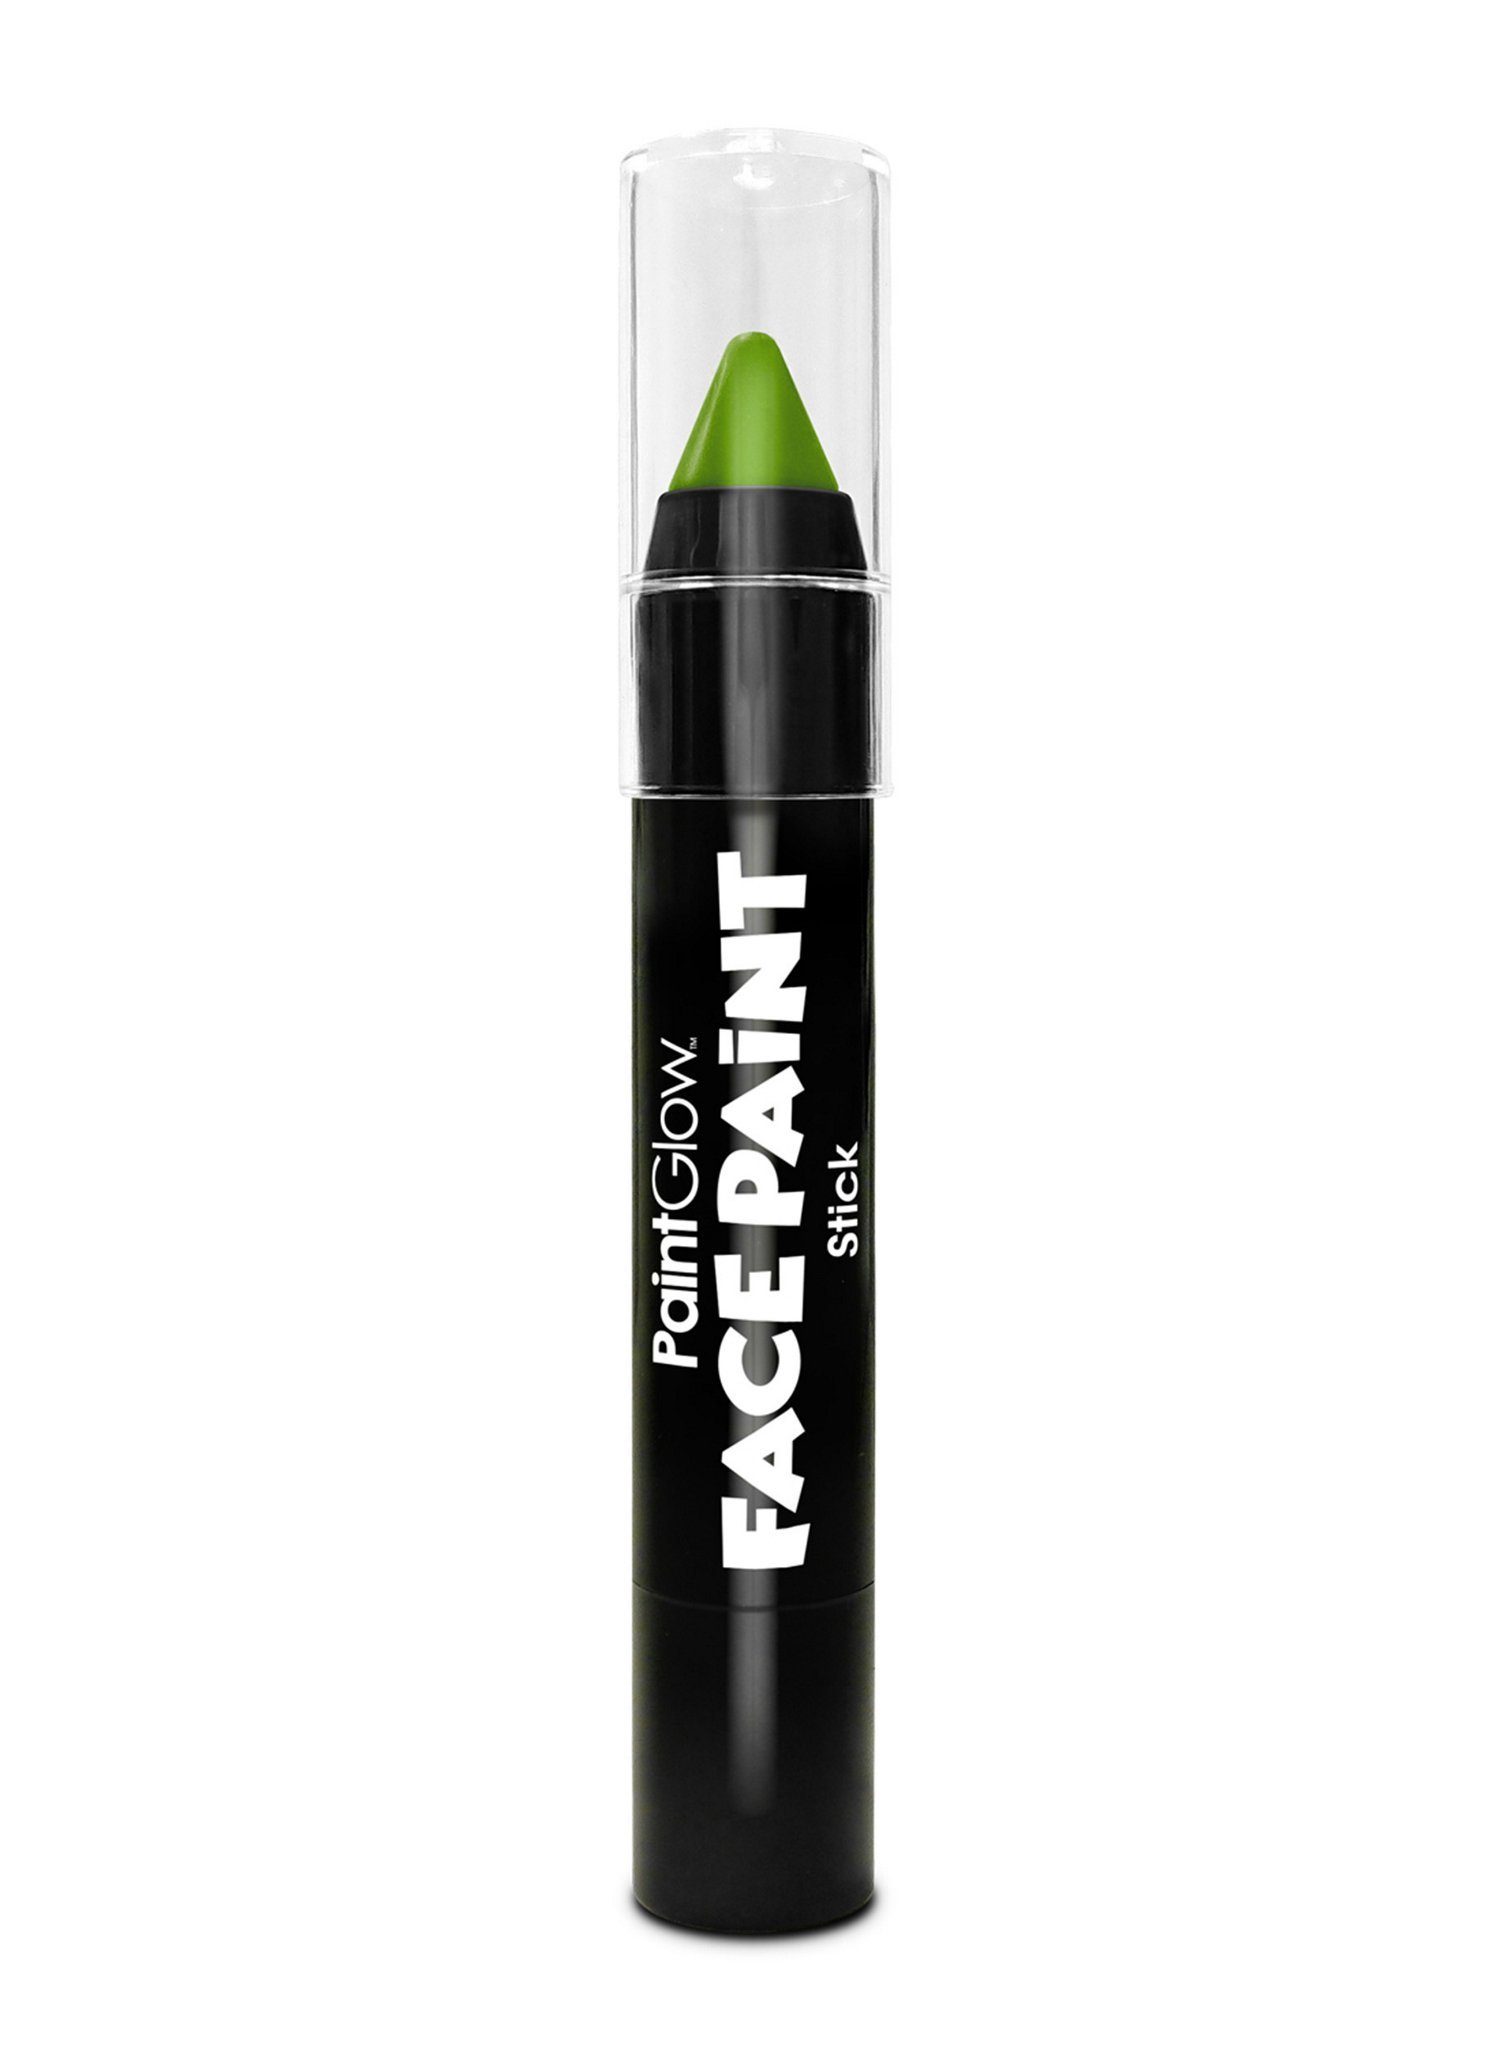 Metamorph Theaterschminke Face Paint hellgrün, Weicher Schminkstift mit kräftig deckender Farbe